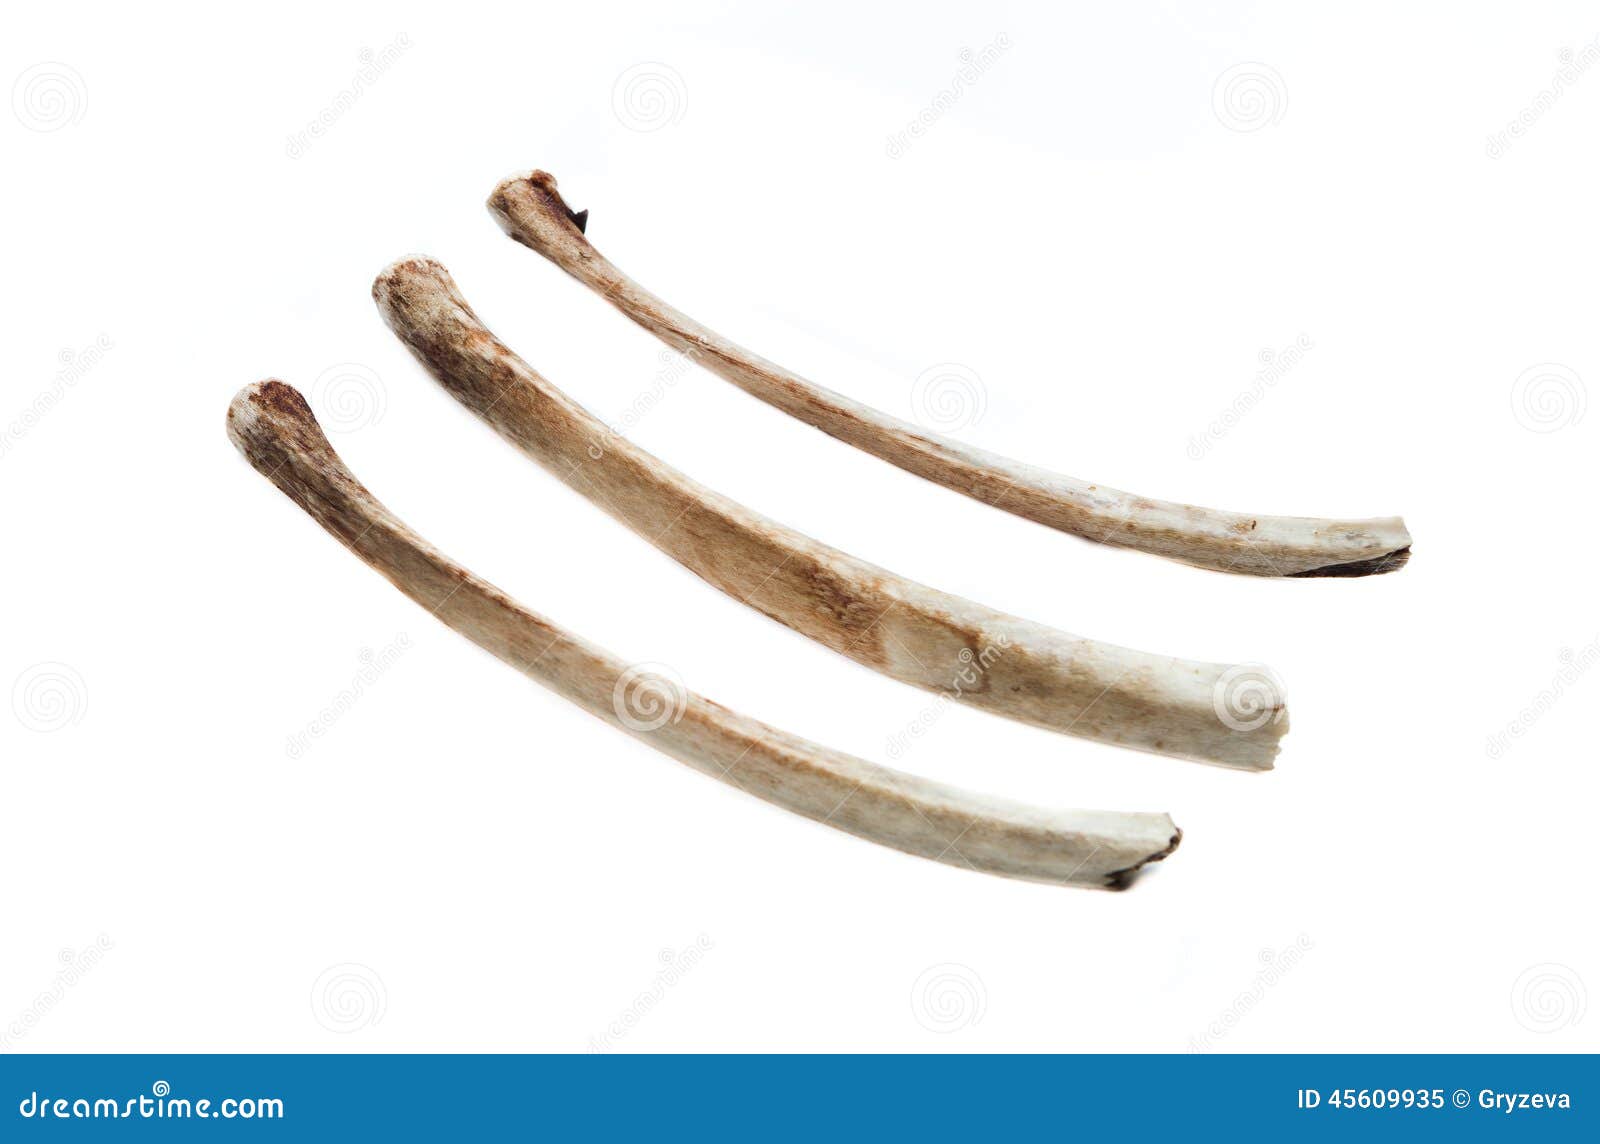 Old bone. Колода на белом фоне изображены кости.